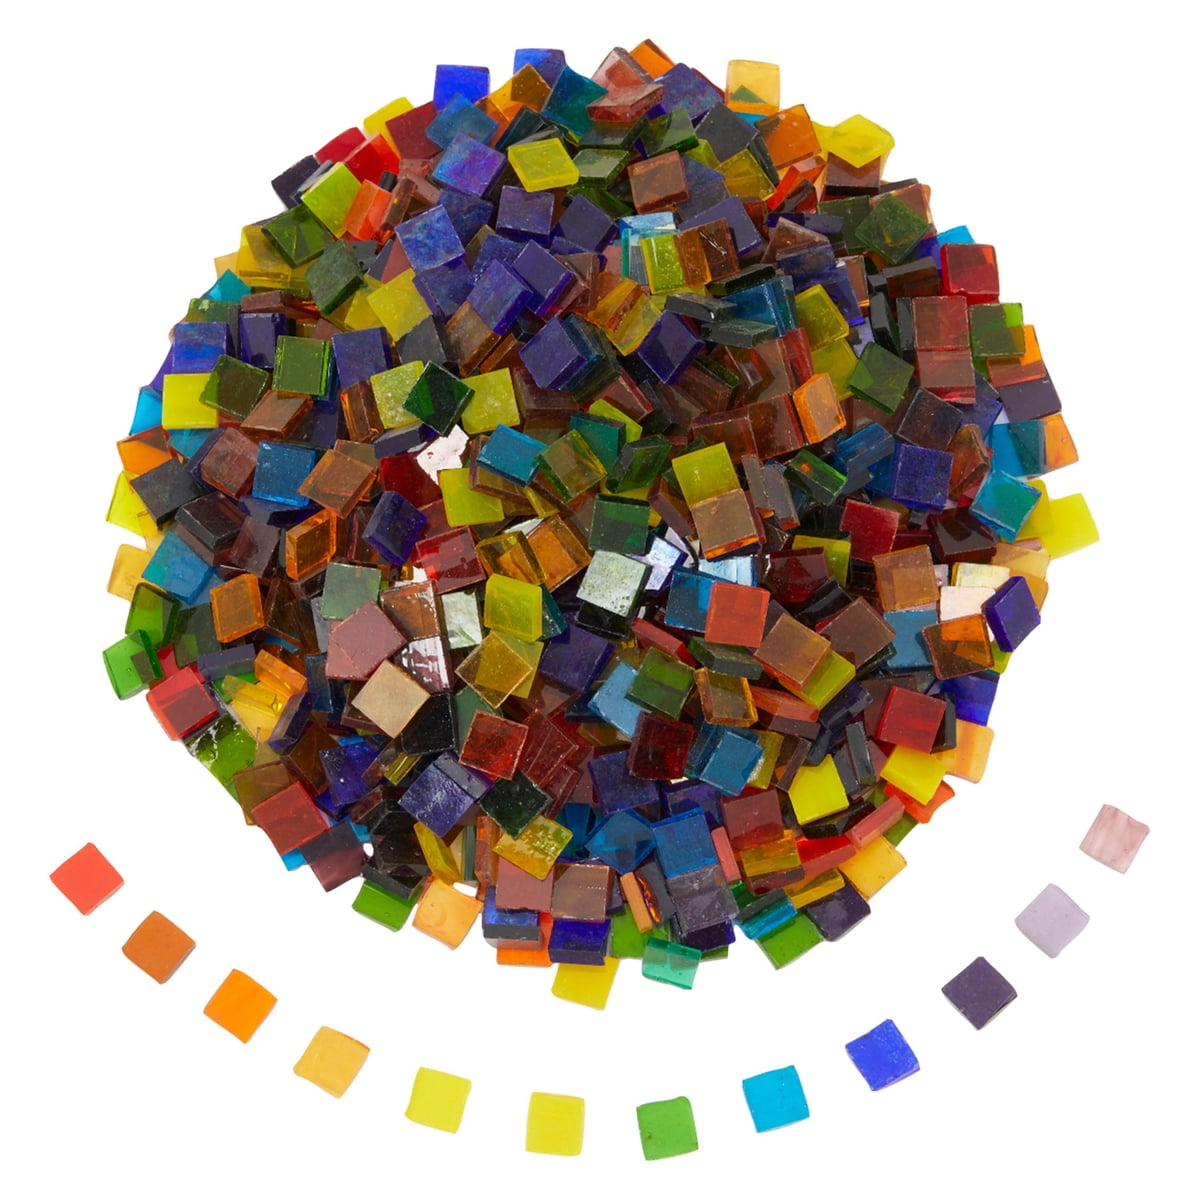 Irregular Mix Glass Mosaic Tiles For Crafts Stained Glass Supplies DIY Art 200g 